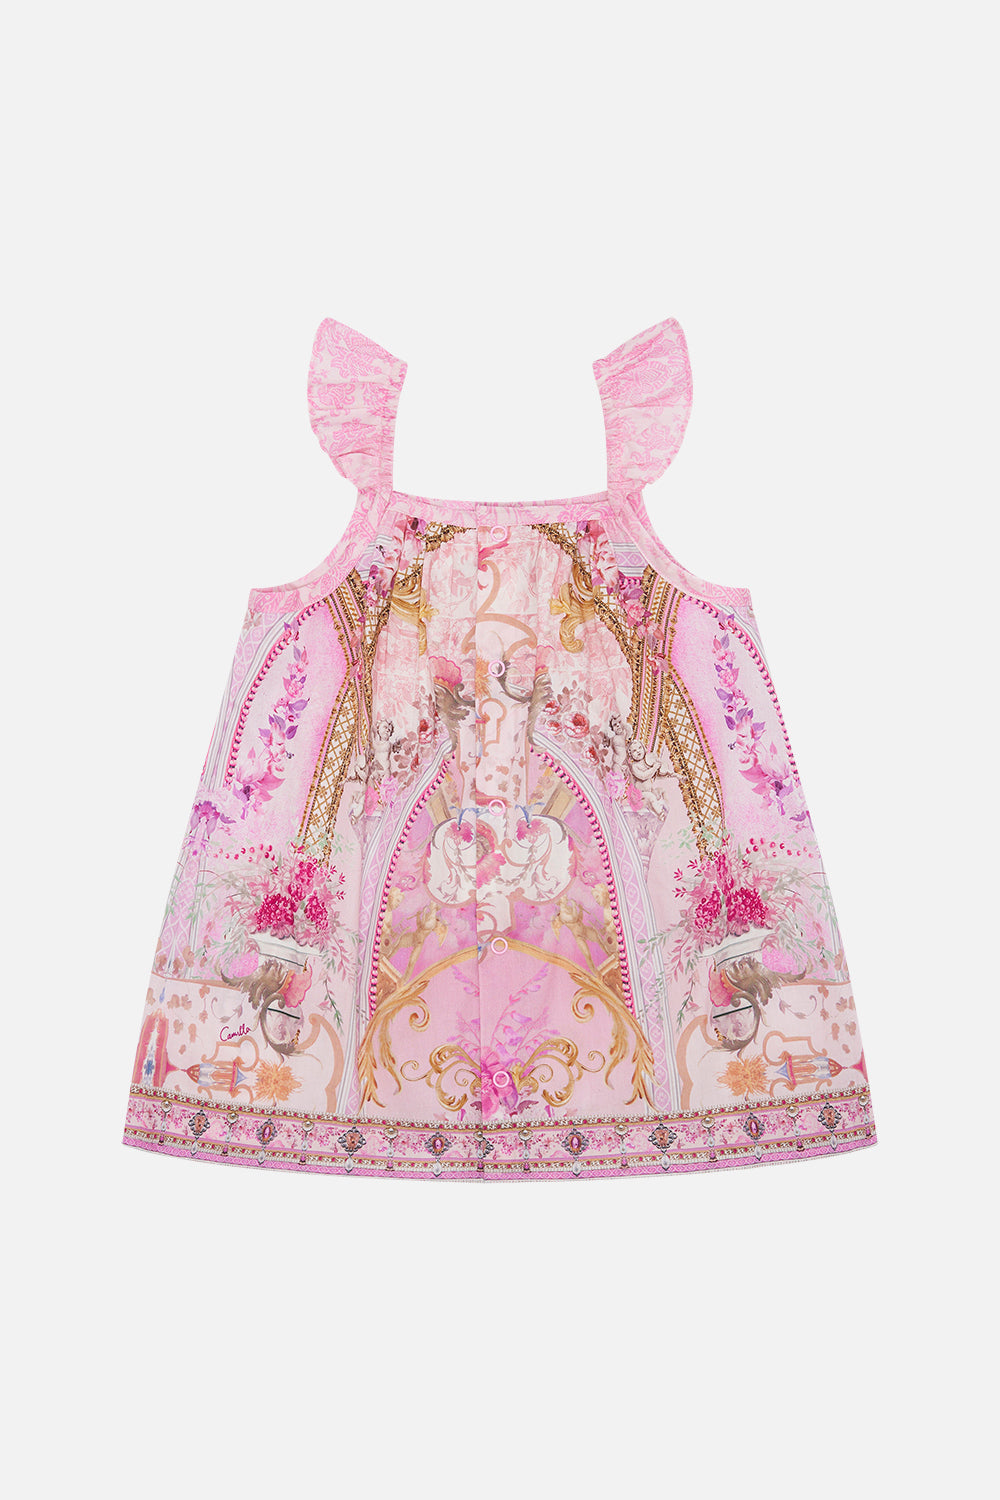 MILLA BY CAMILLA pink dress in Fresco Fairytale print